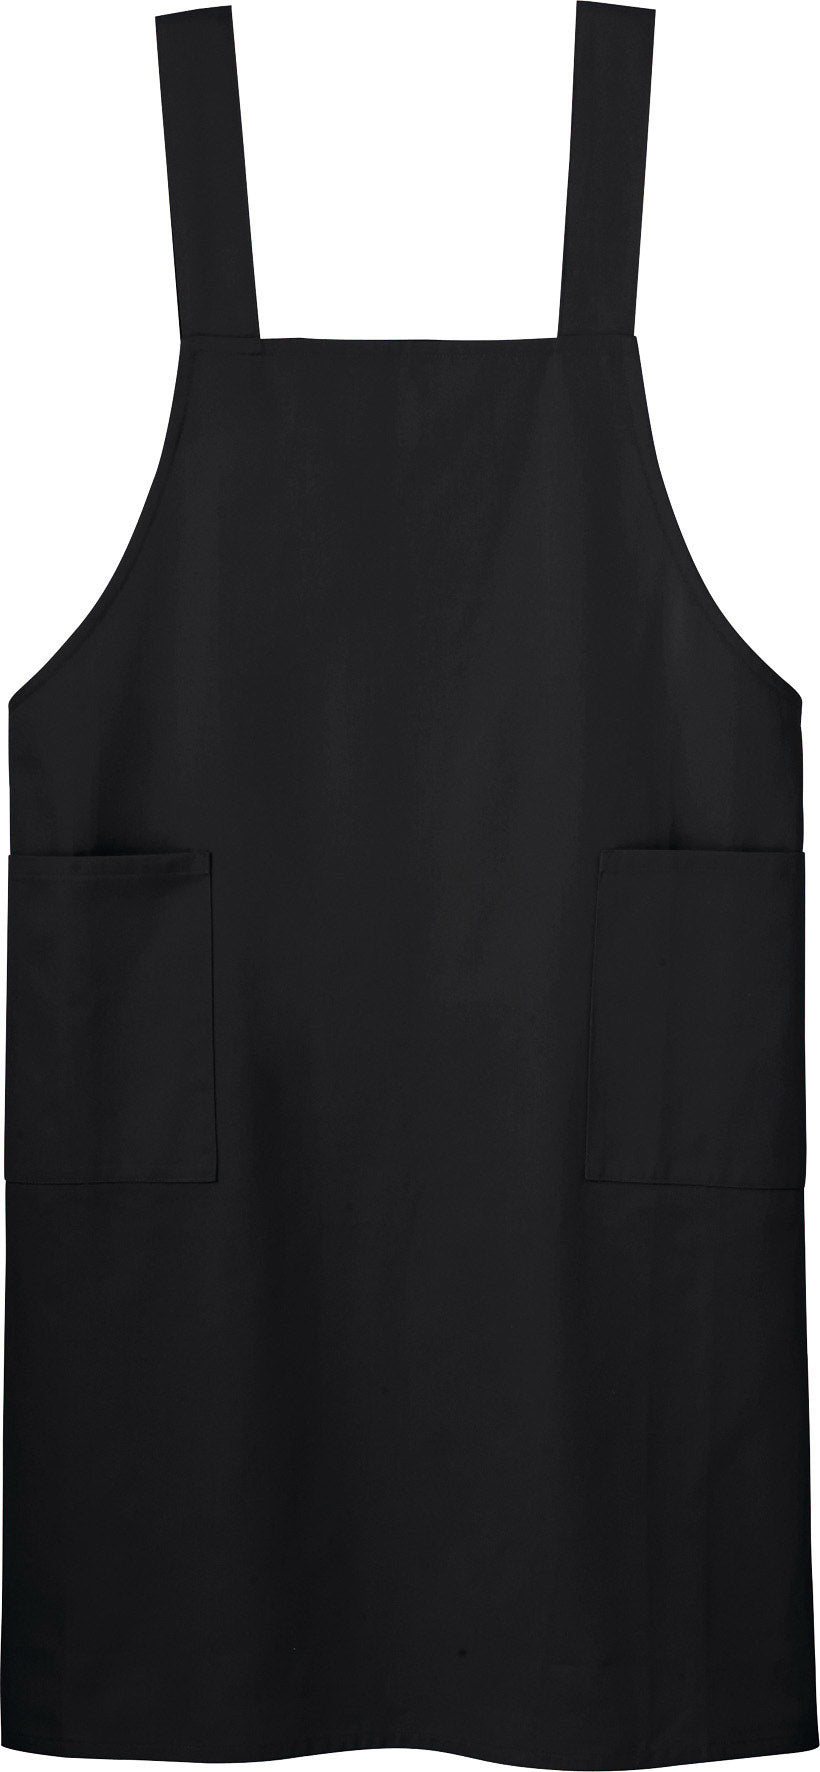 [Plus-1] 875-THA H type apron